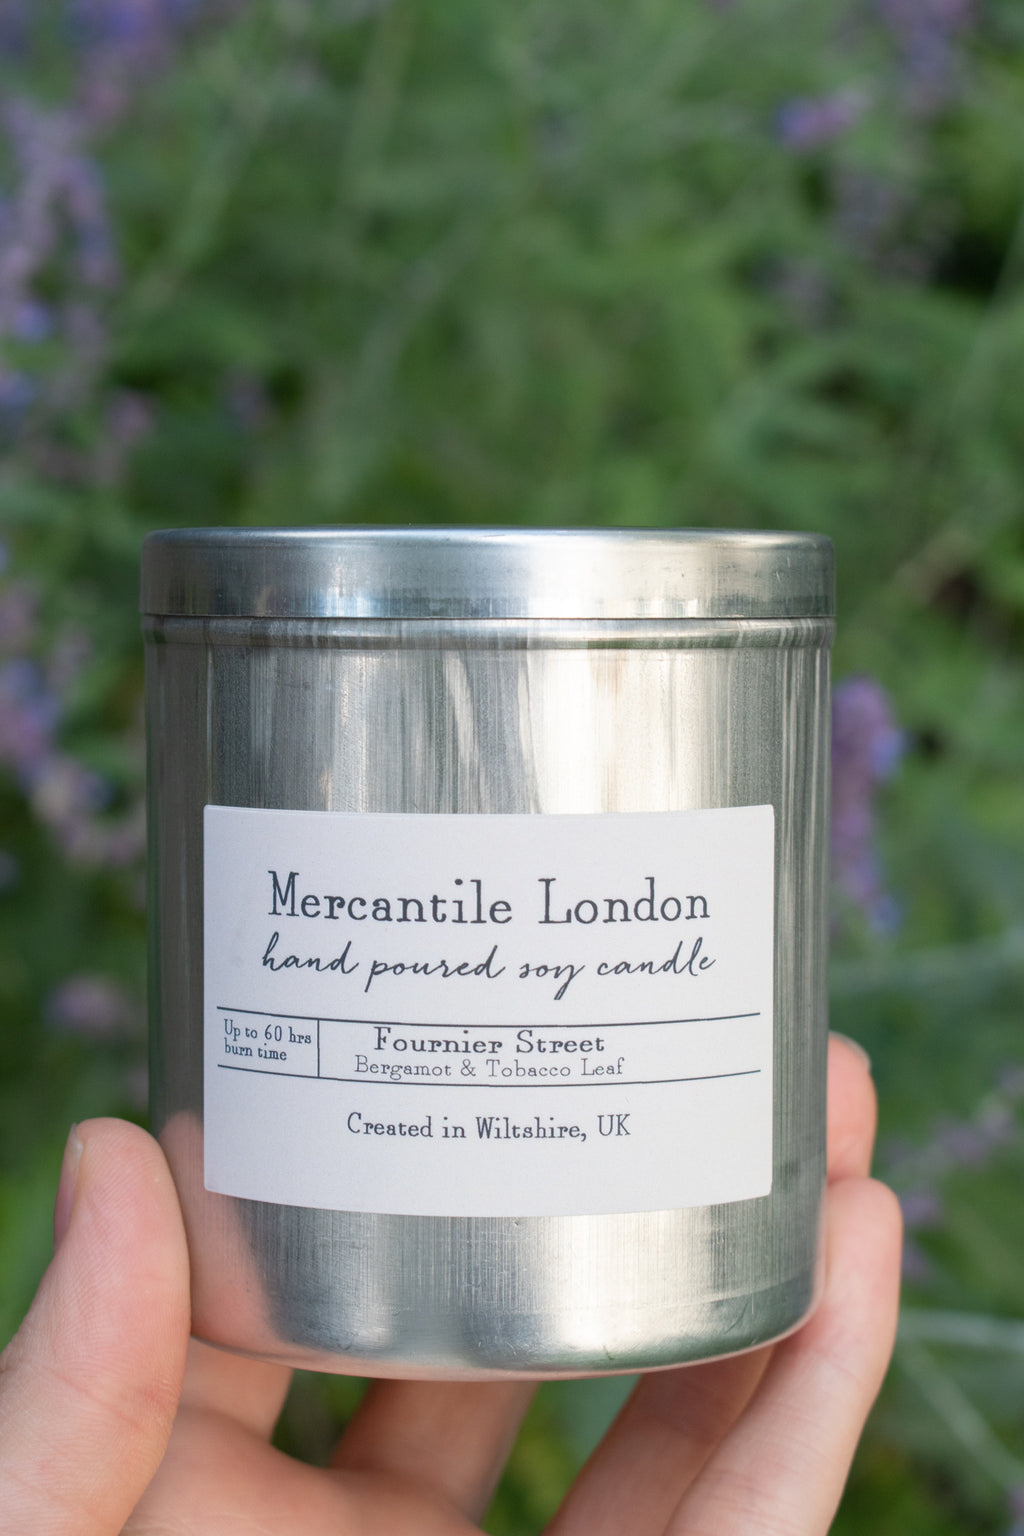 Mercantile London Fournier Street Bergamot And Tobacco Leaf Tin Candle - The Mercantile London